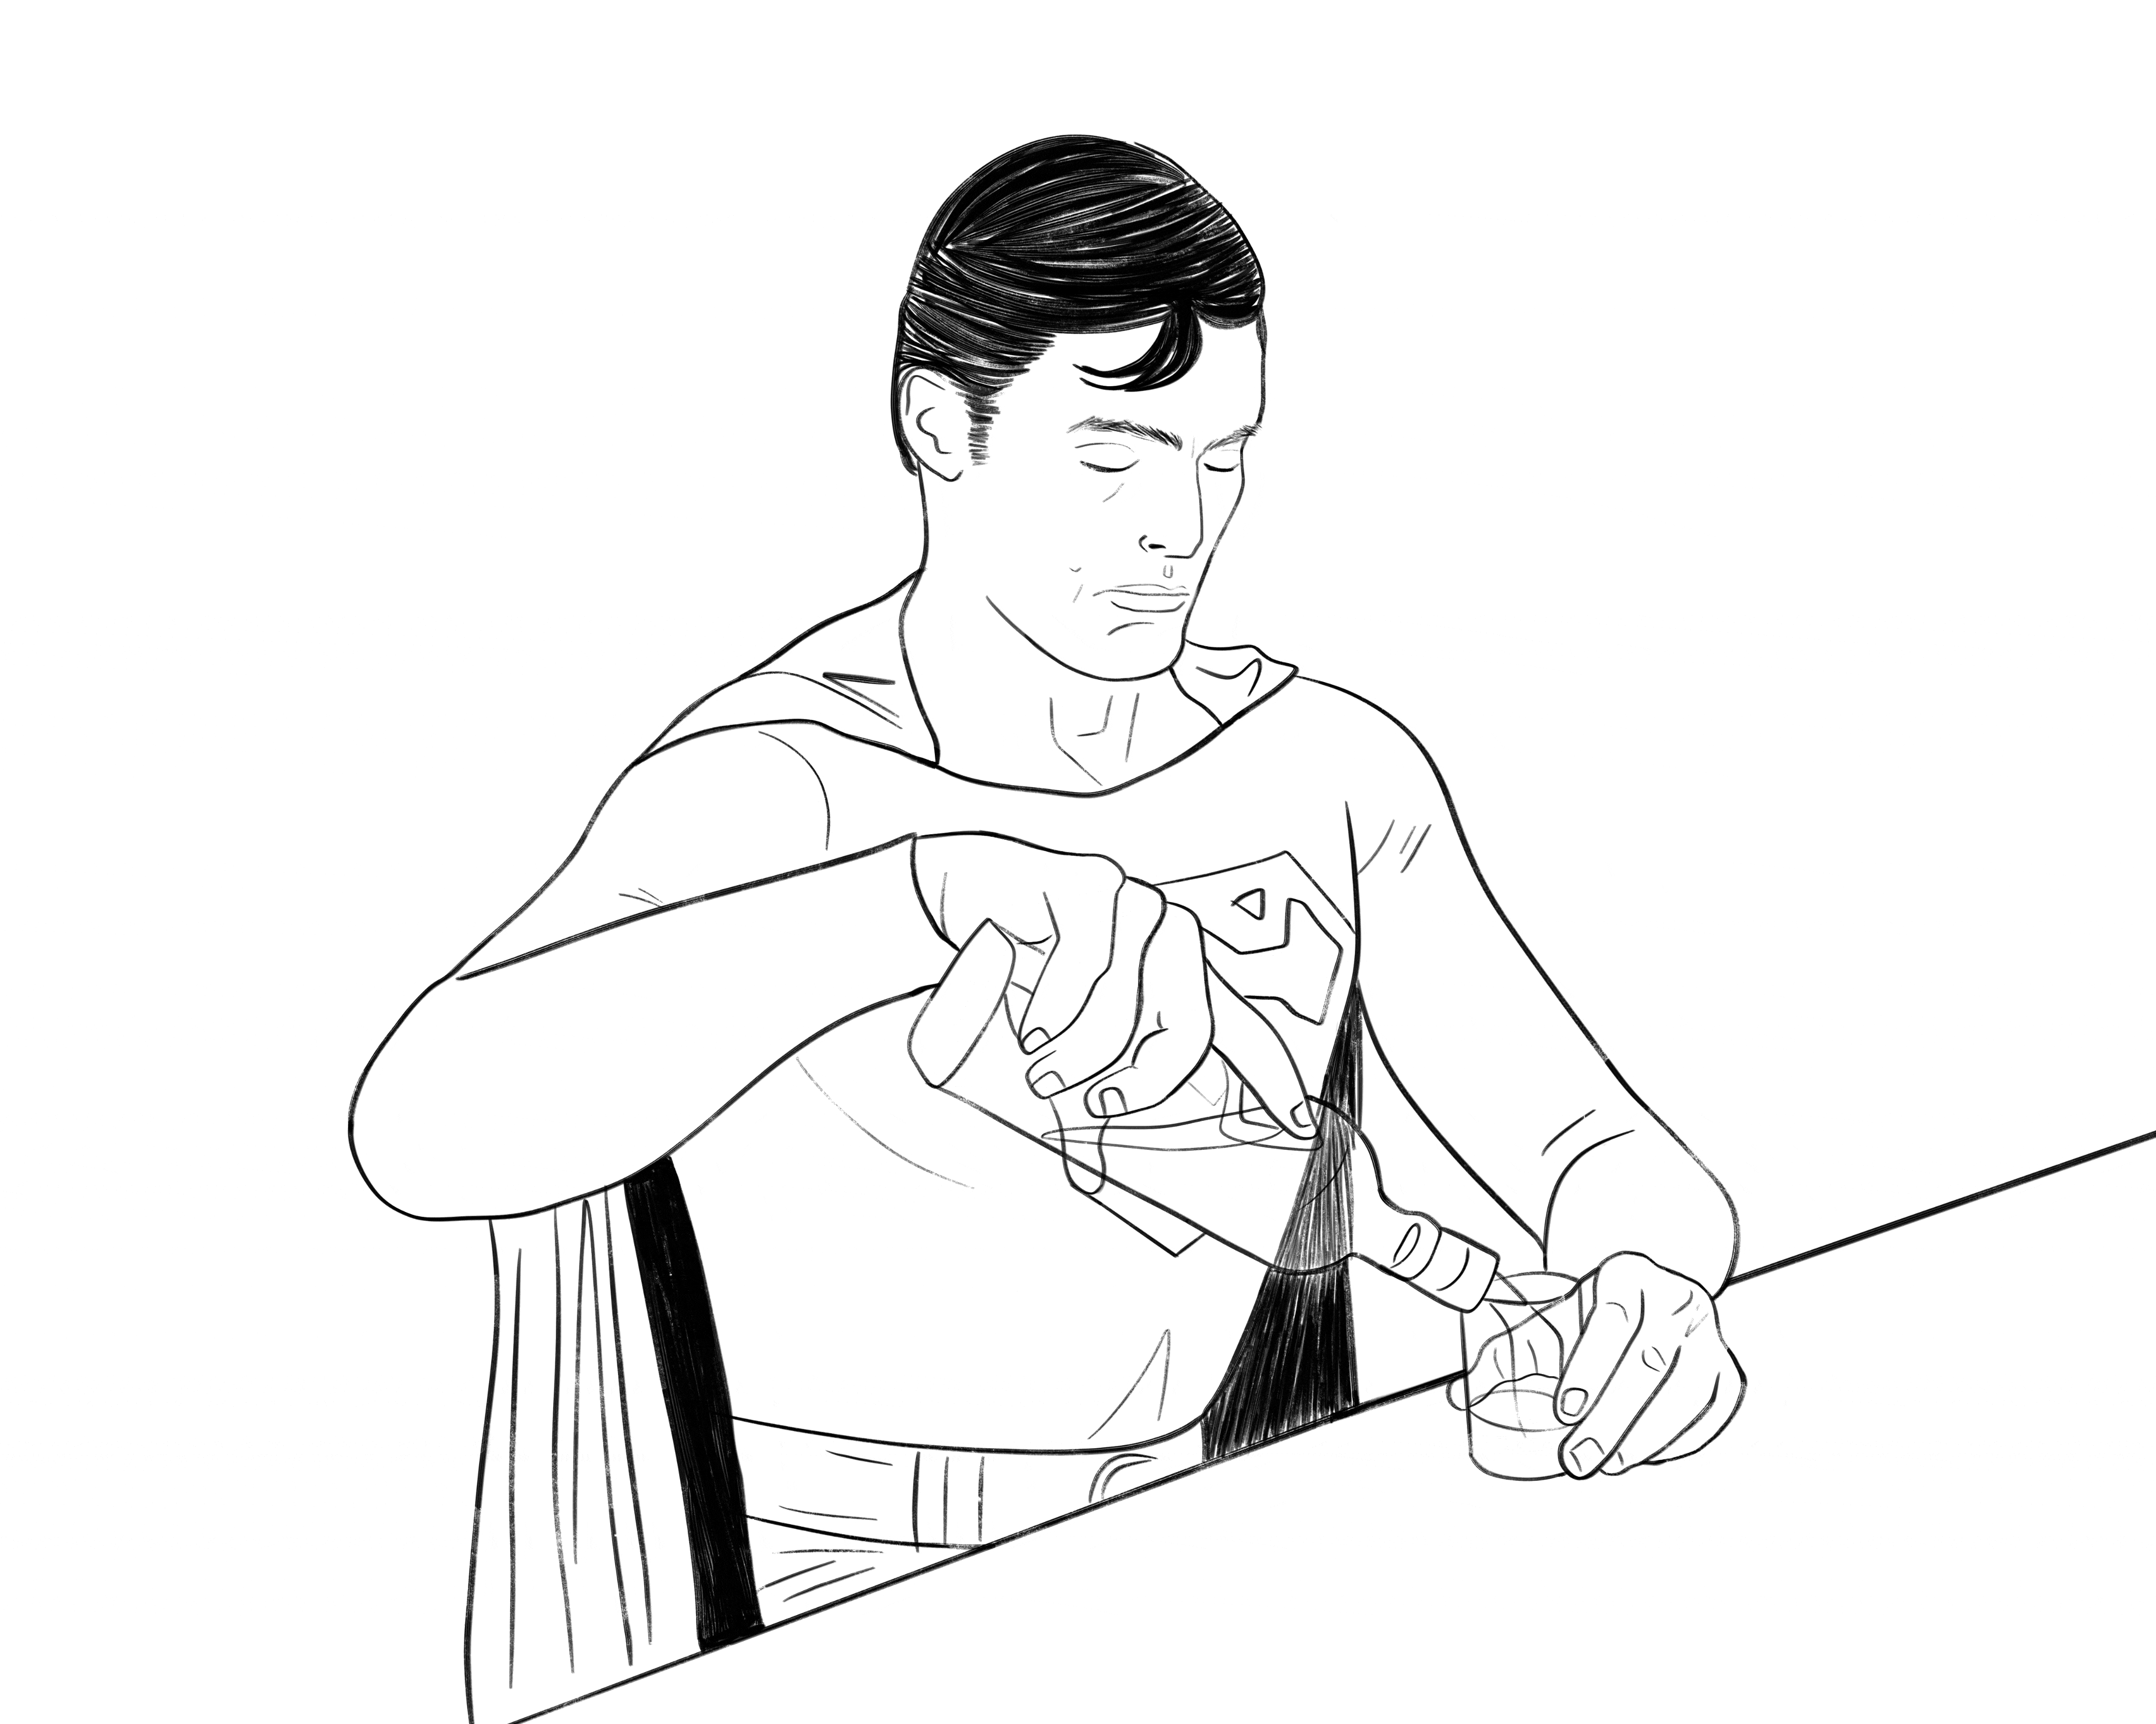 Superman III Animation by Alonso Guzmán Barone